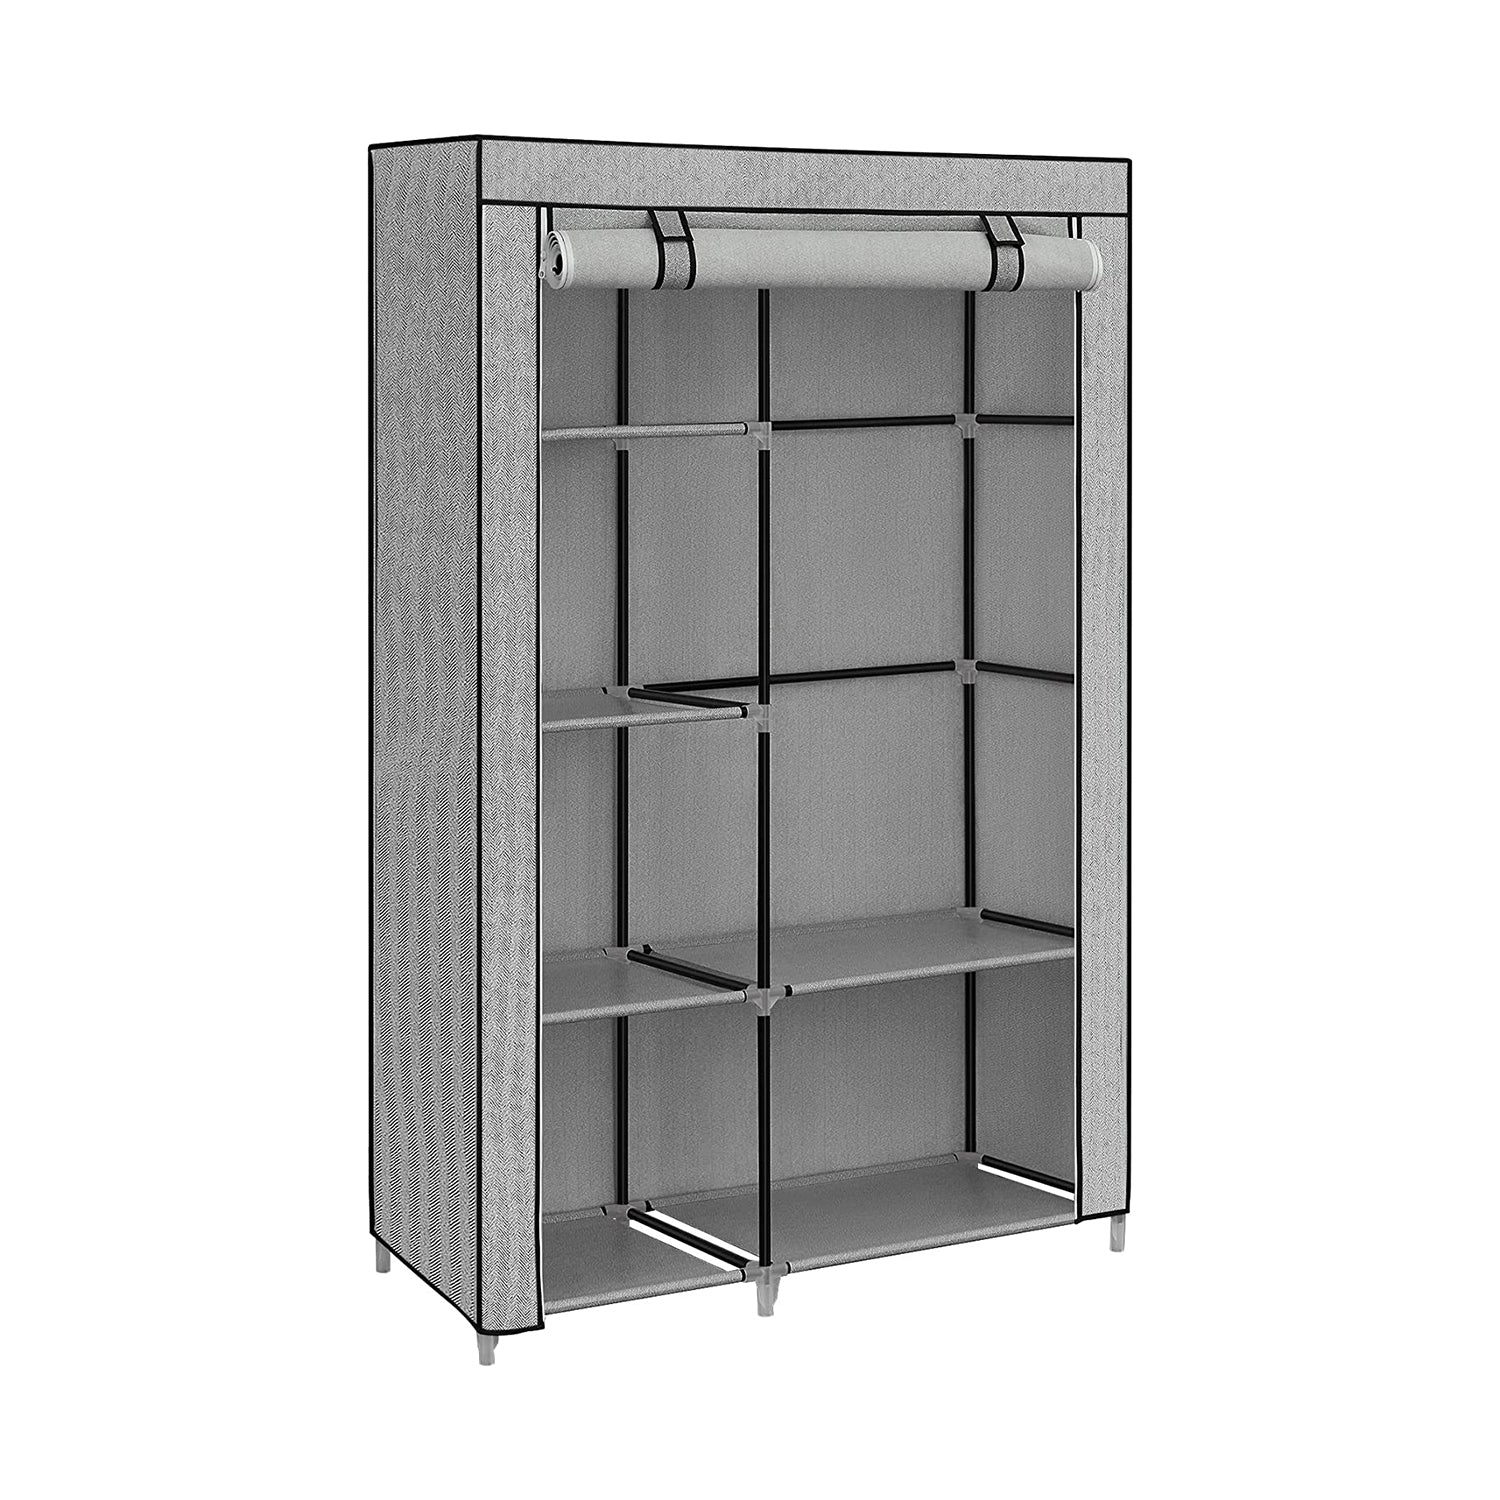 SONGMICS Portable Closet Storage Organizer, 55.1 x 16.9 x 68.5 Inches, Gray